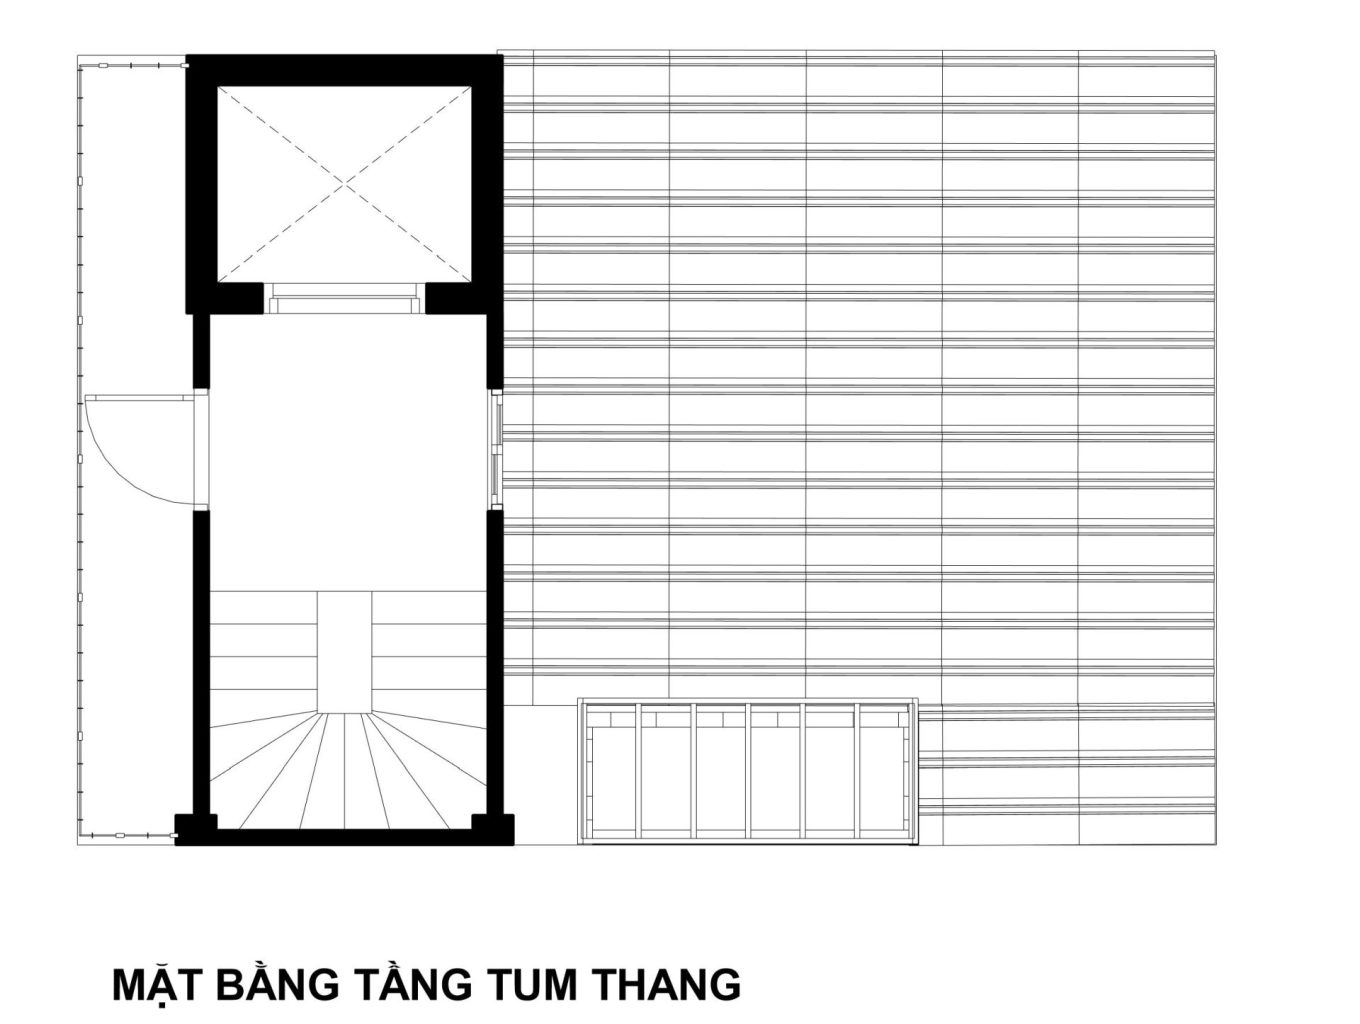 1 - Floor Plan - MẶT BẰNG TUM THANG